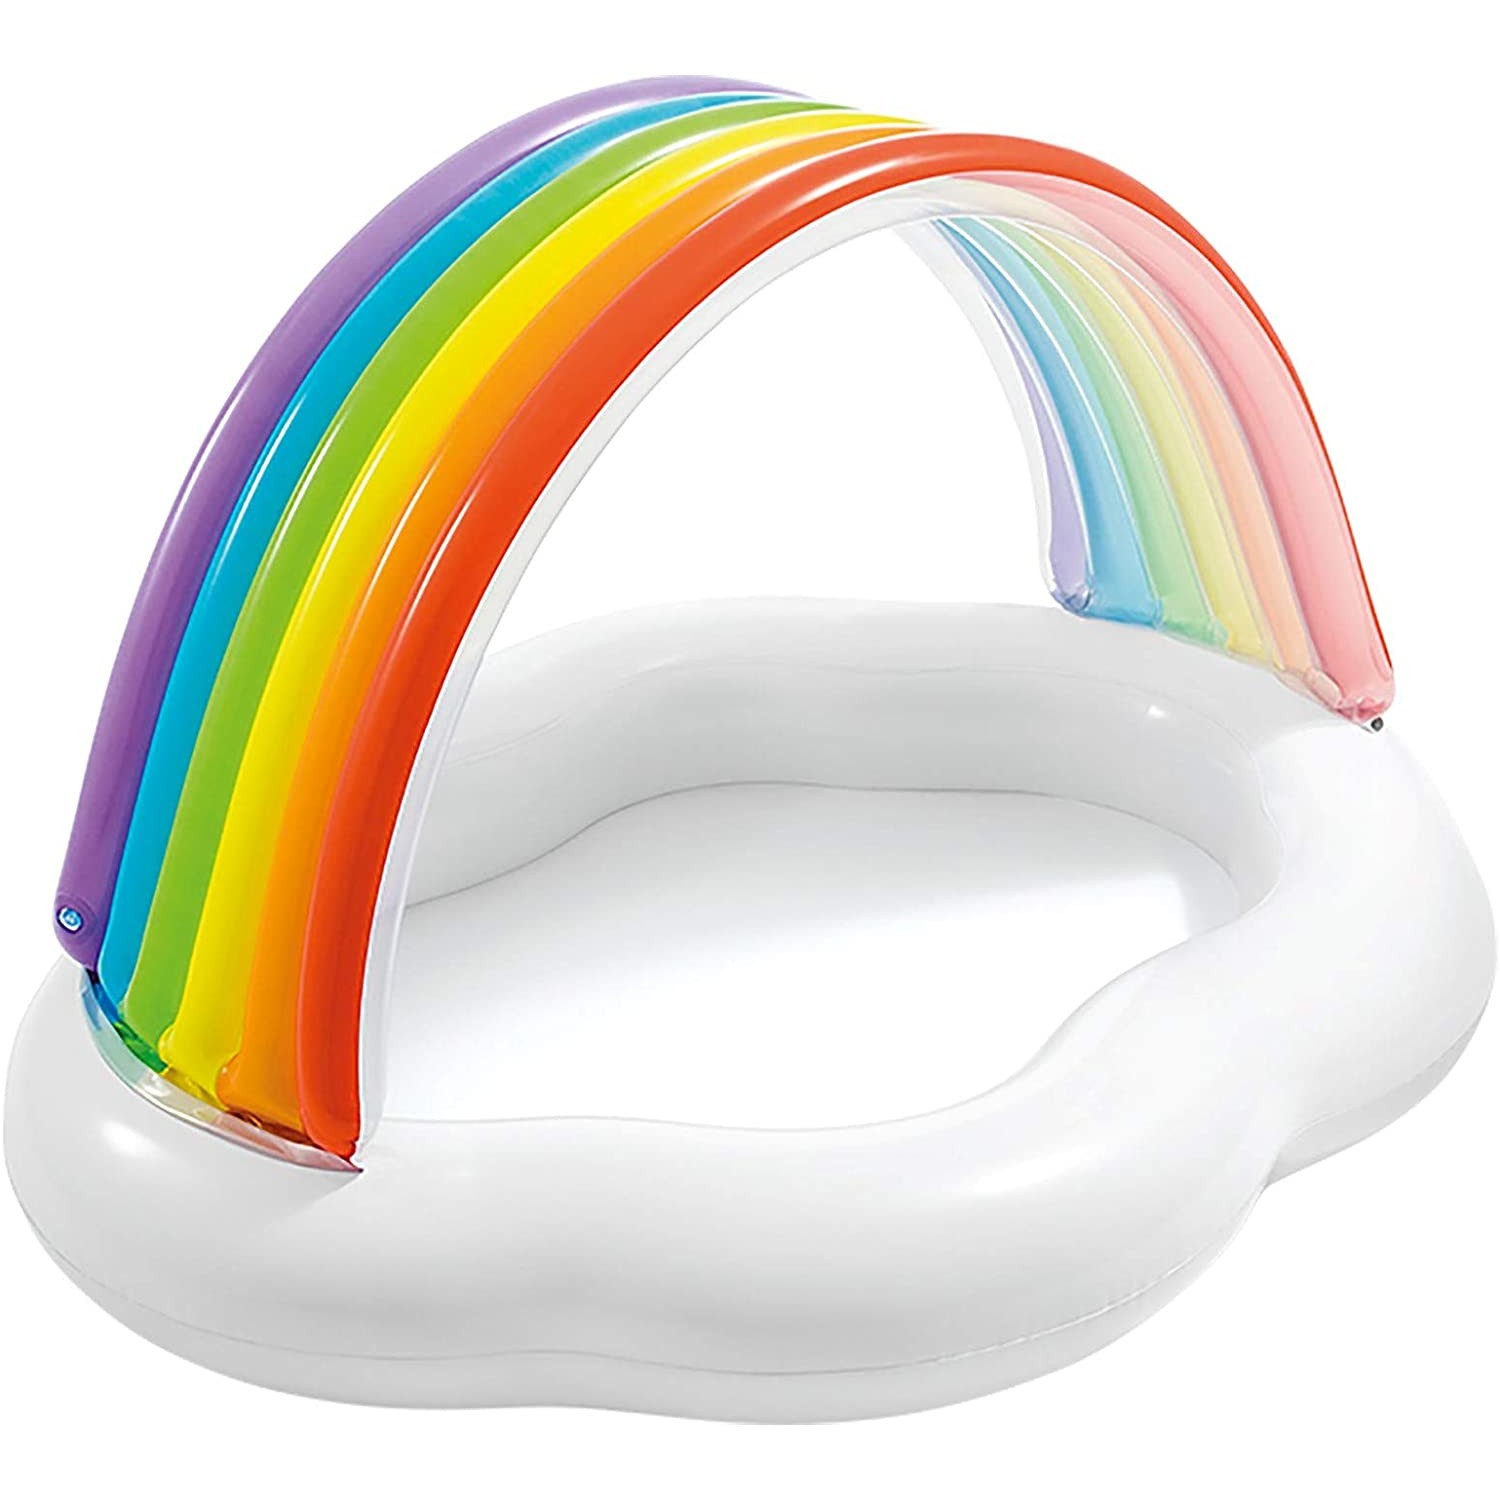 Baby Rainbow mehrfarbig INTEX Pool (142x119x84cm) Cloud Planschbecken, -